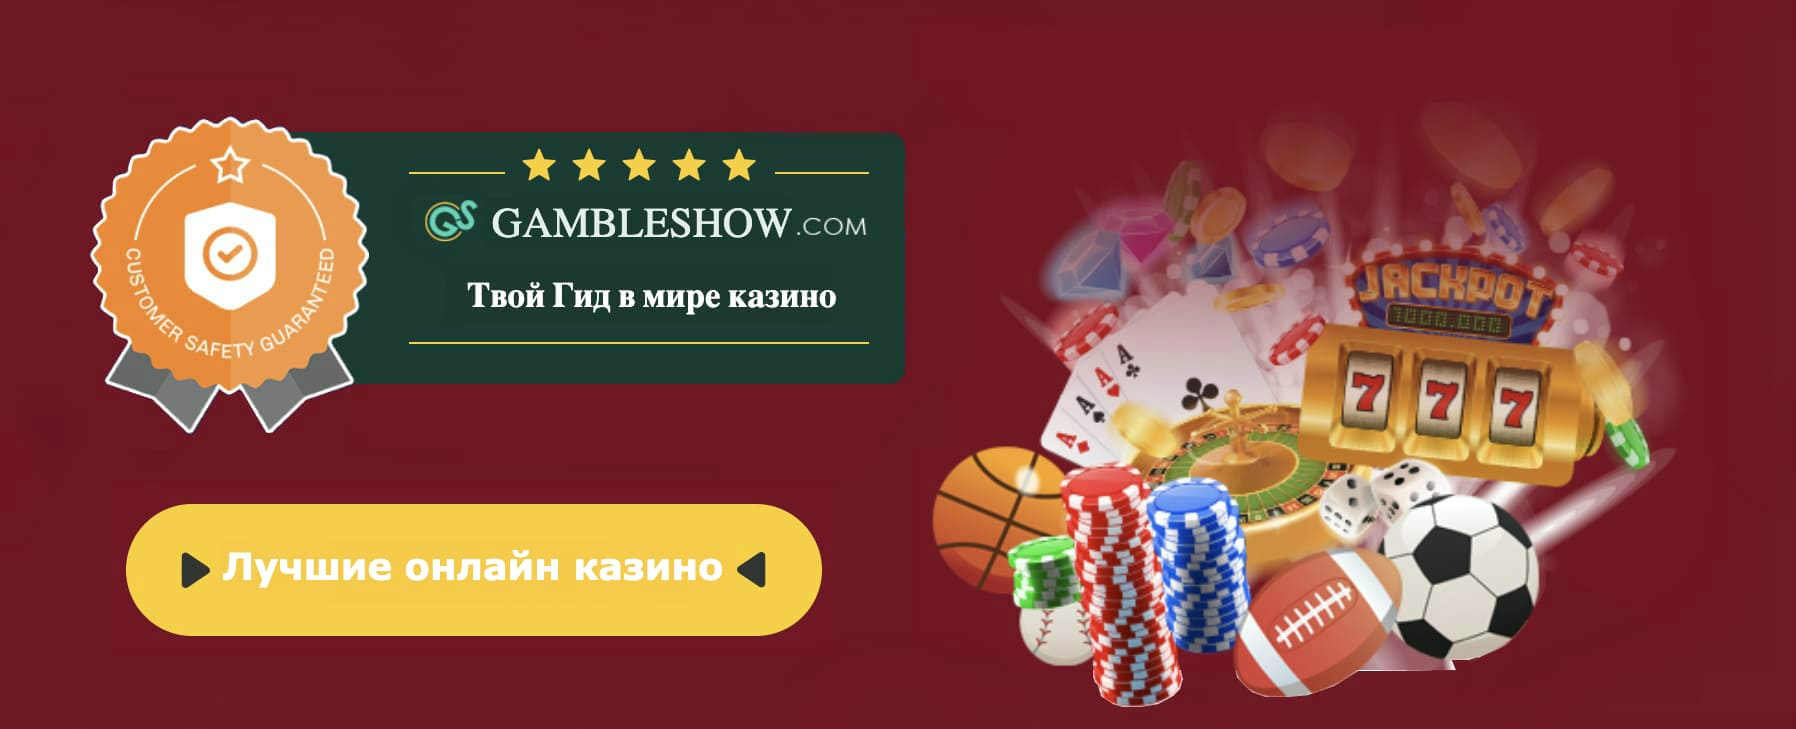 Casino magic virtual